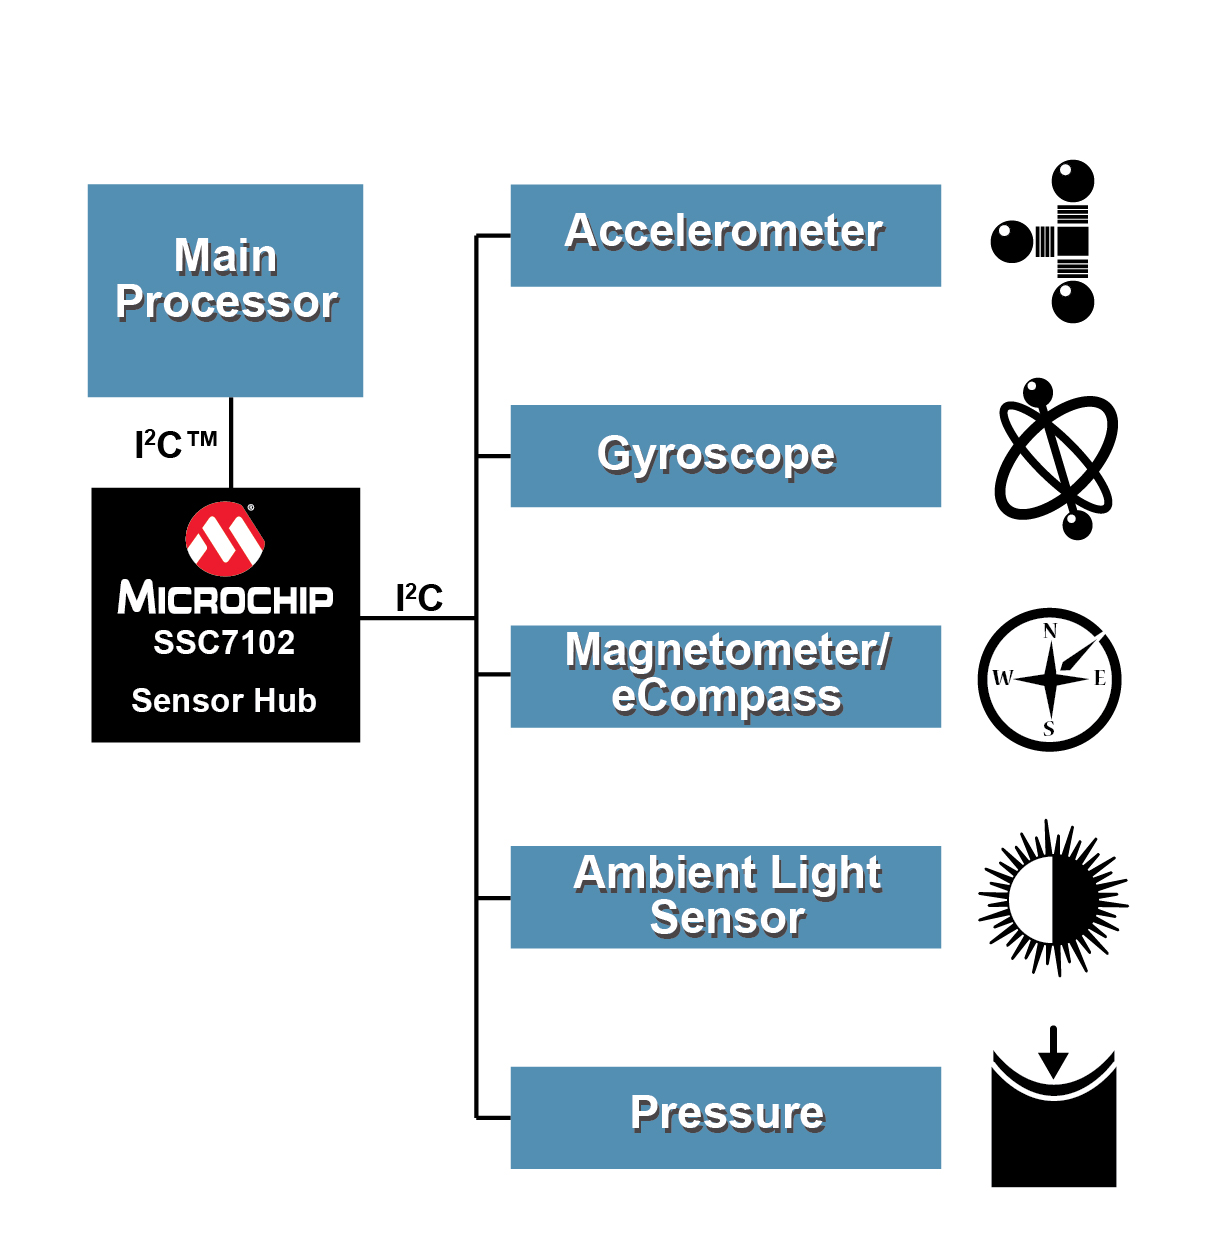 Microchip’s low-power sensor hub makes sensor fusion easy